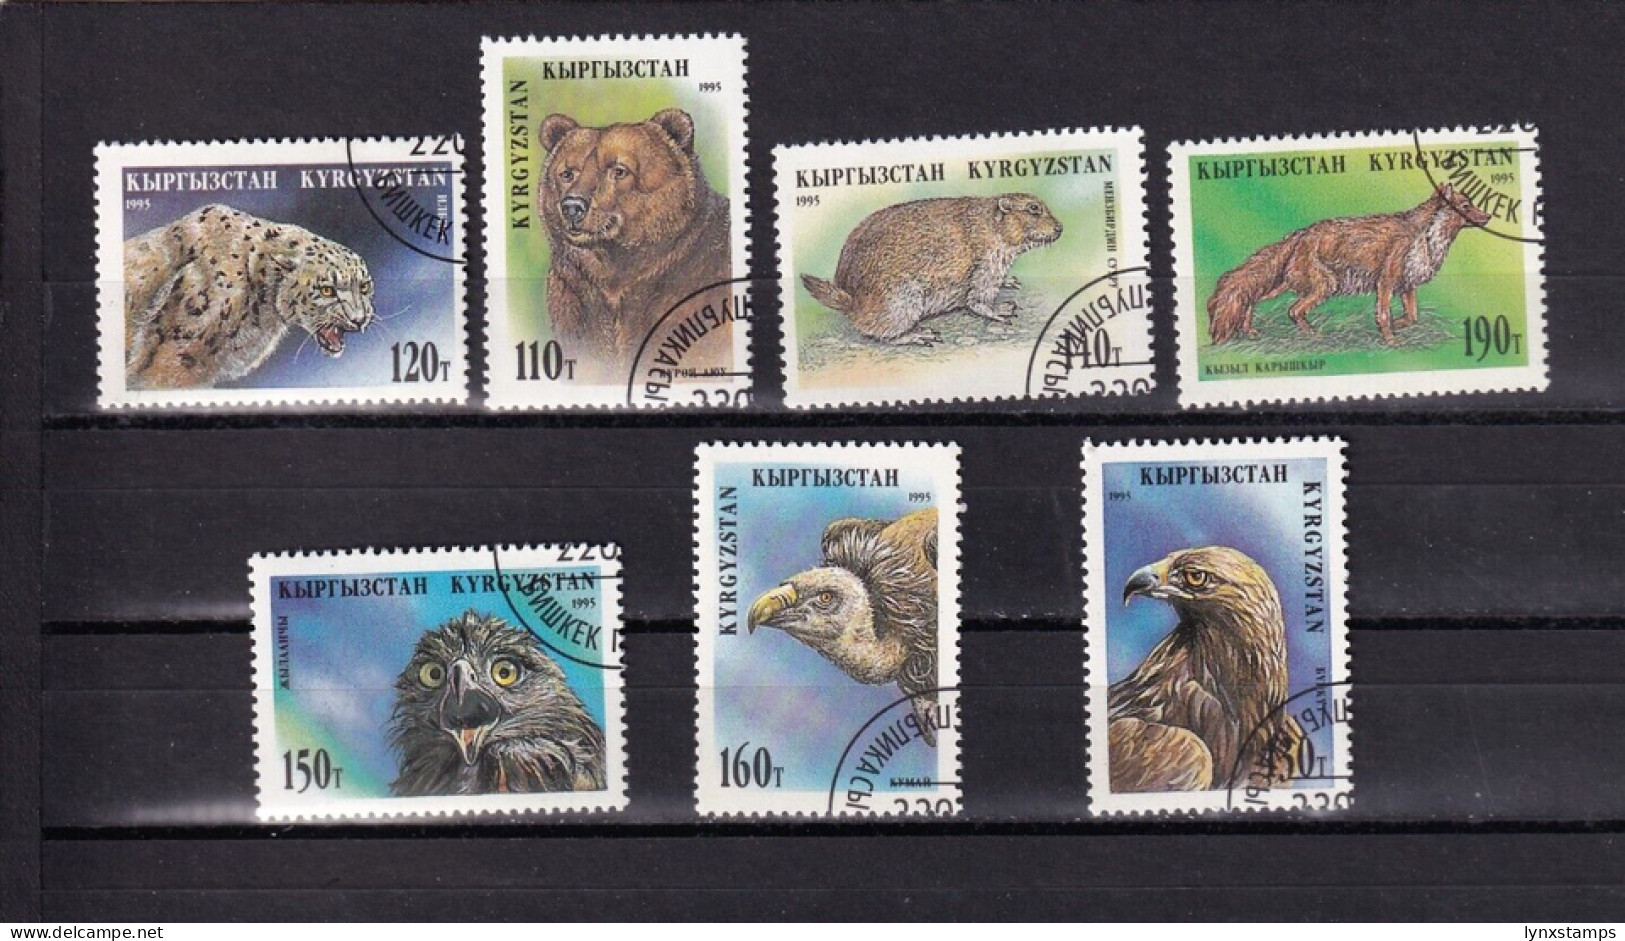 LI02 Kyrgyzstan 1995 Fauna Of Kyrgyzstan Full Set Used Stamps - Kirghizistan